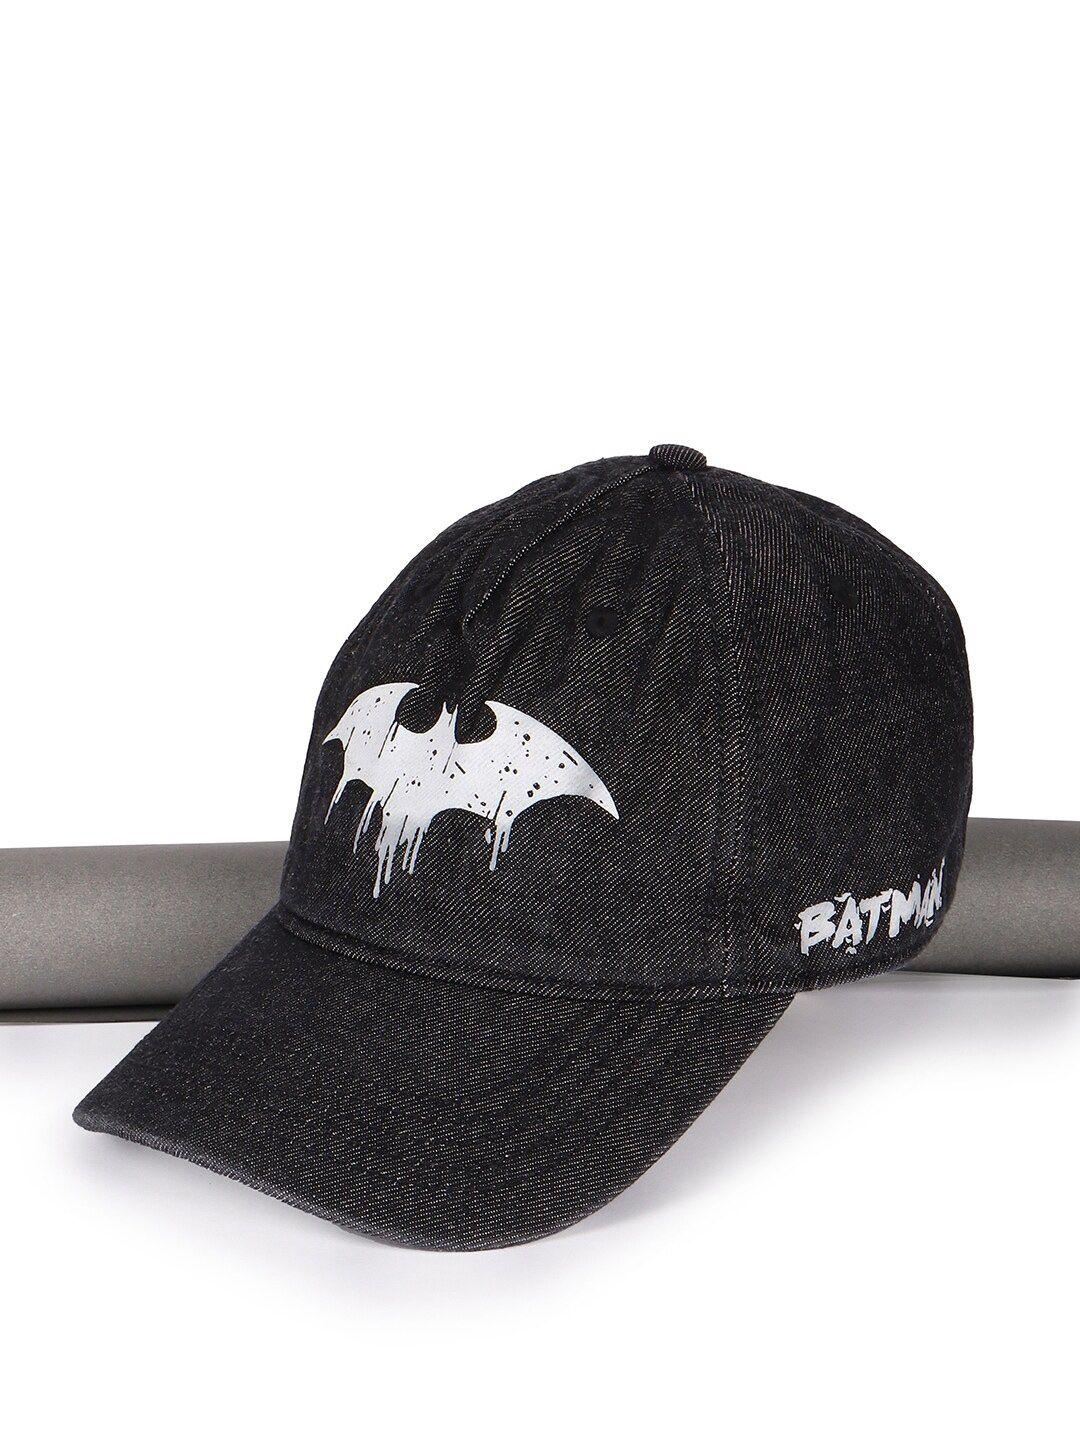 bewakoof unisex dark knight batman printed cotton baseball cap